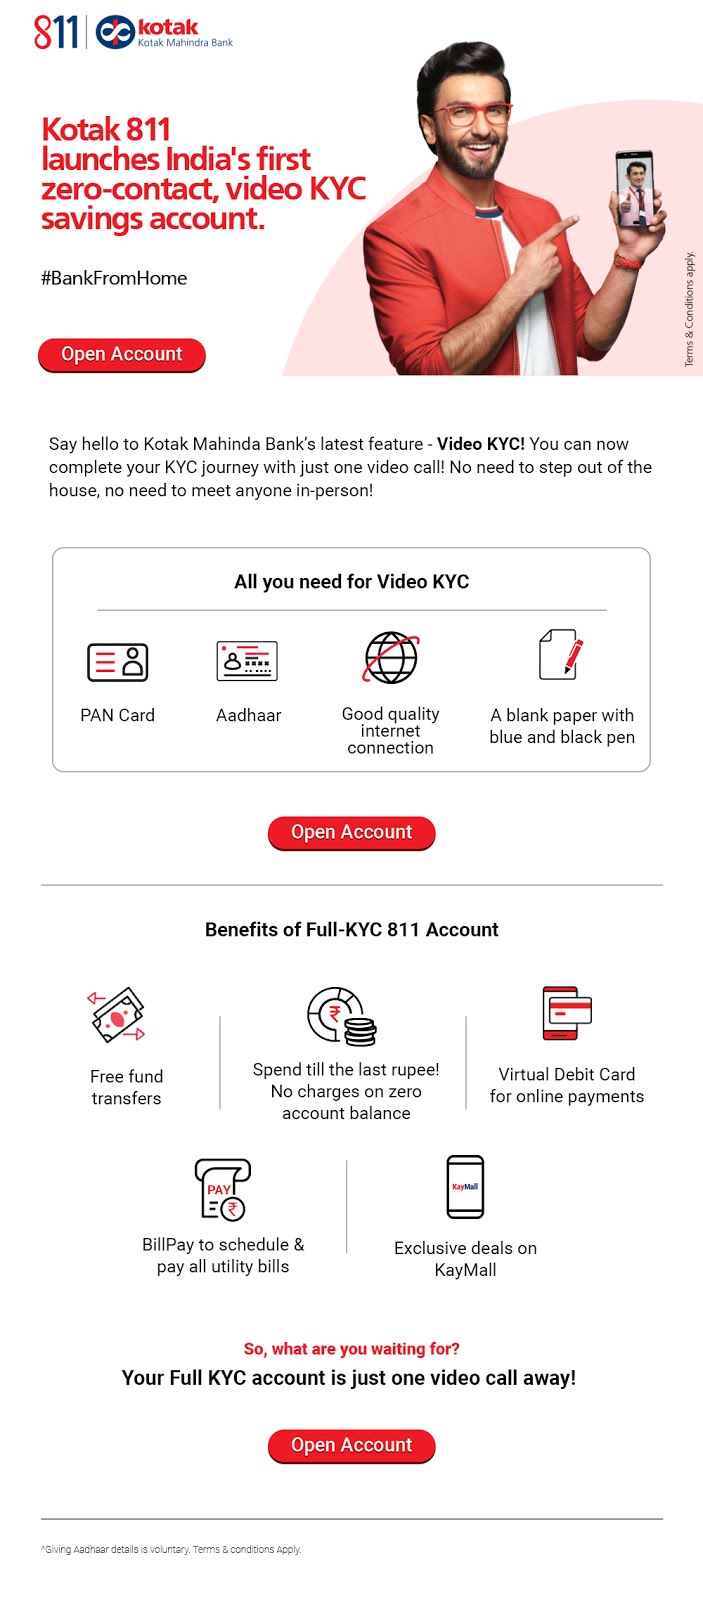 India’s first zero-contact Video KYC Savings Account